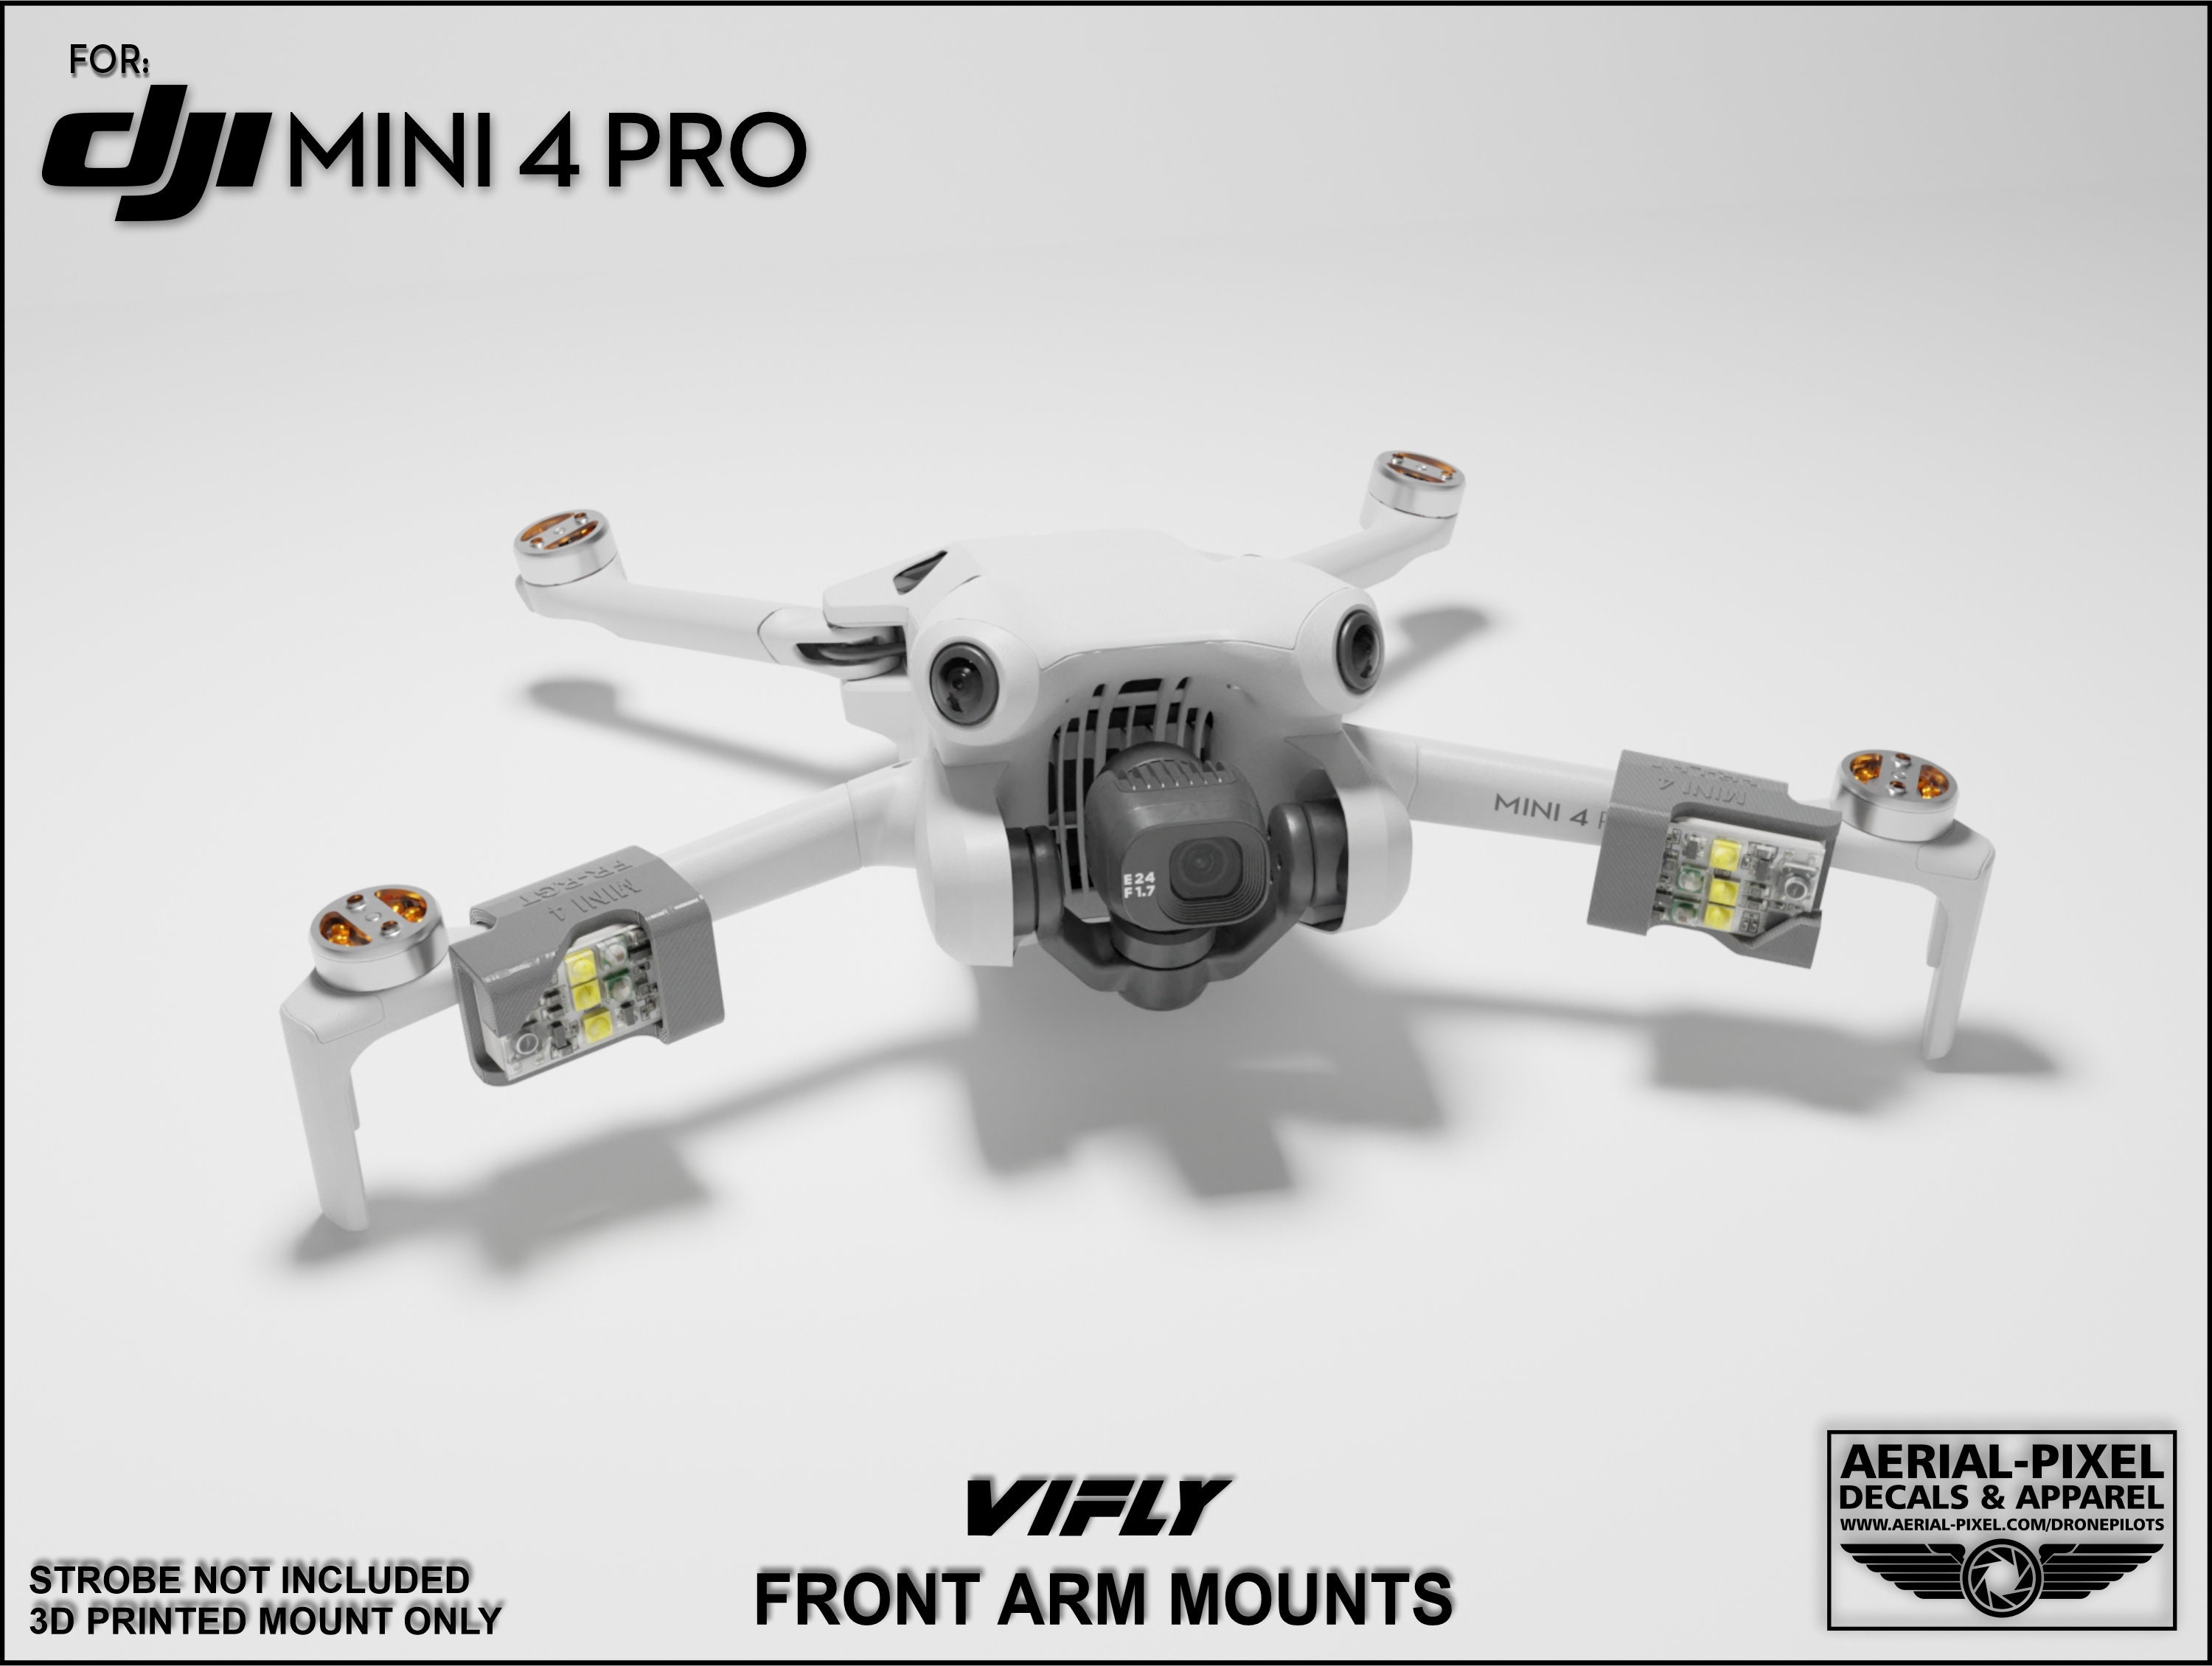 DJI Mini 3 Pro Fly More Kit + RC - Todo Drones